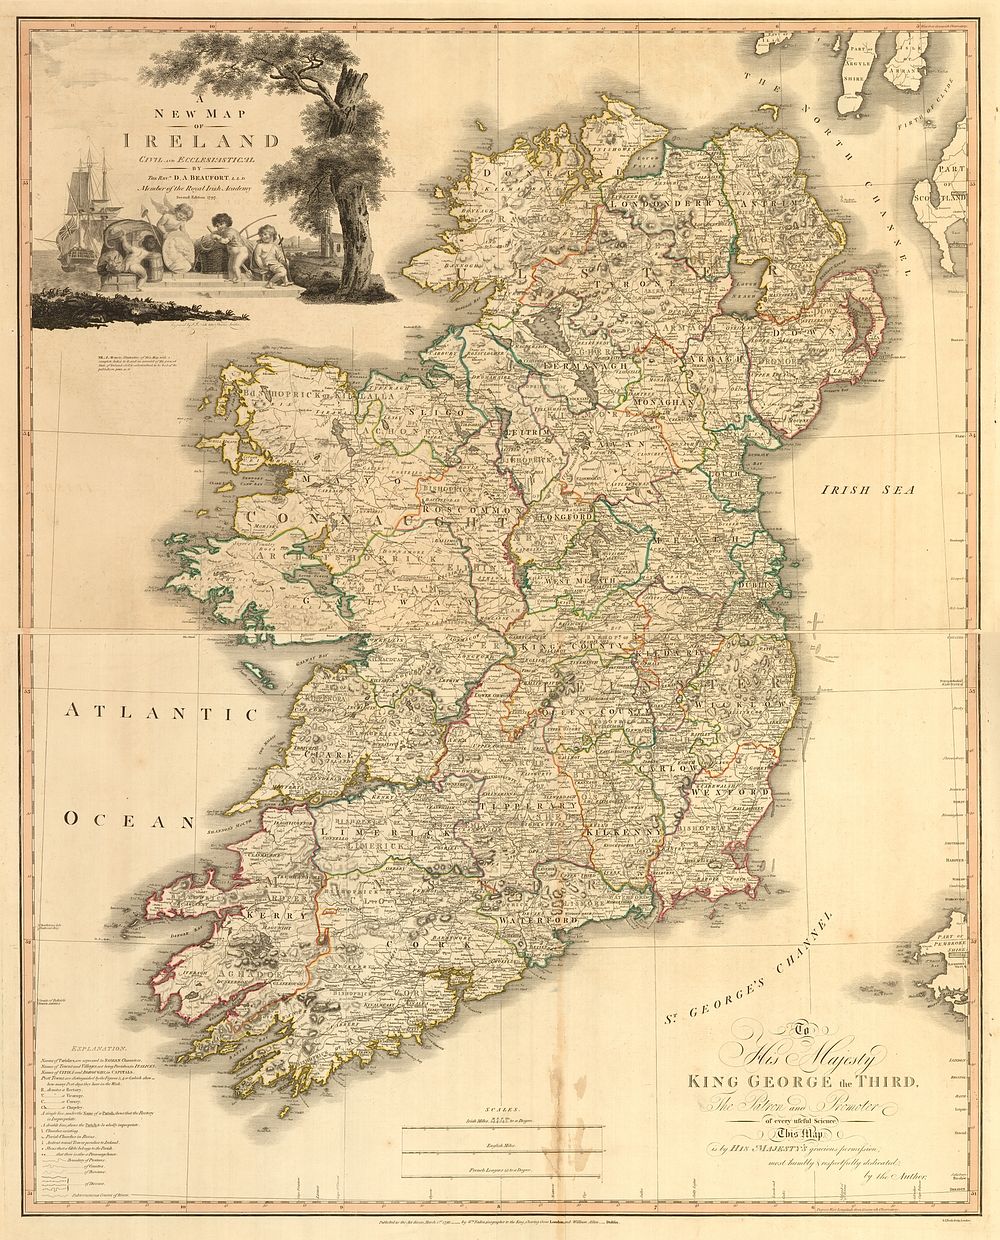 Memoir of a map of Ireland (1797) by Daniel Augustus Beaufort